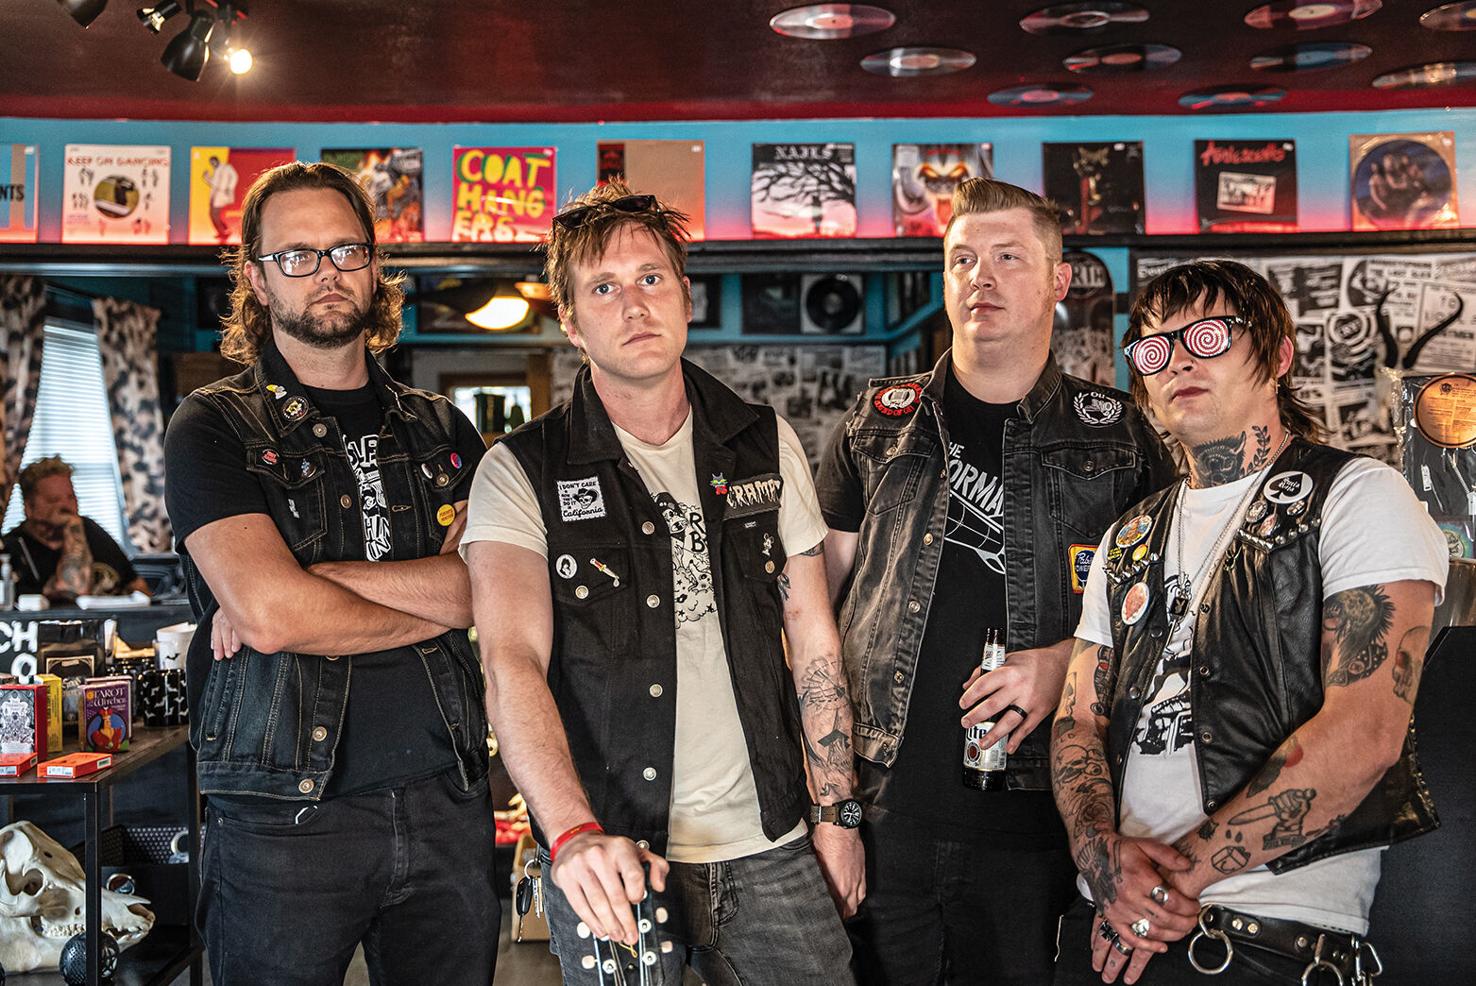 Tulsa Punk Rock Flea Market celebrates subcultures through music and